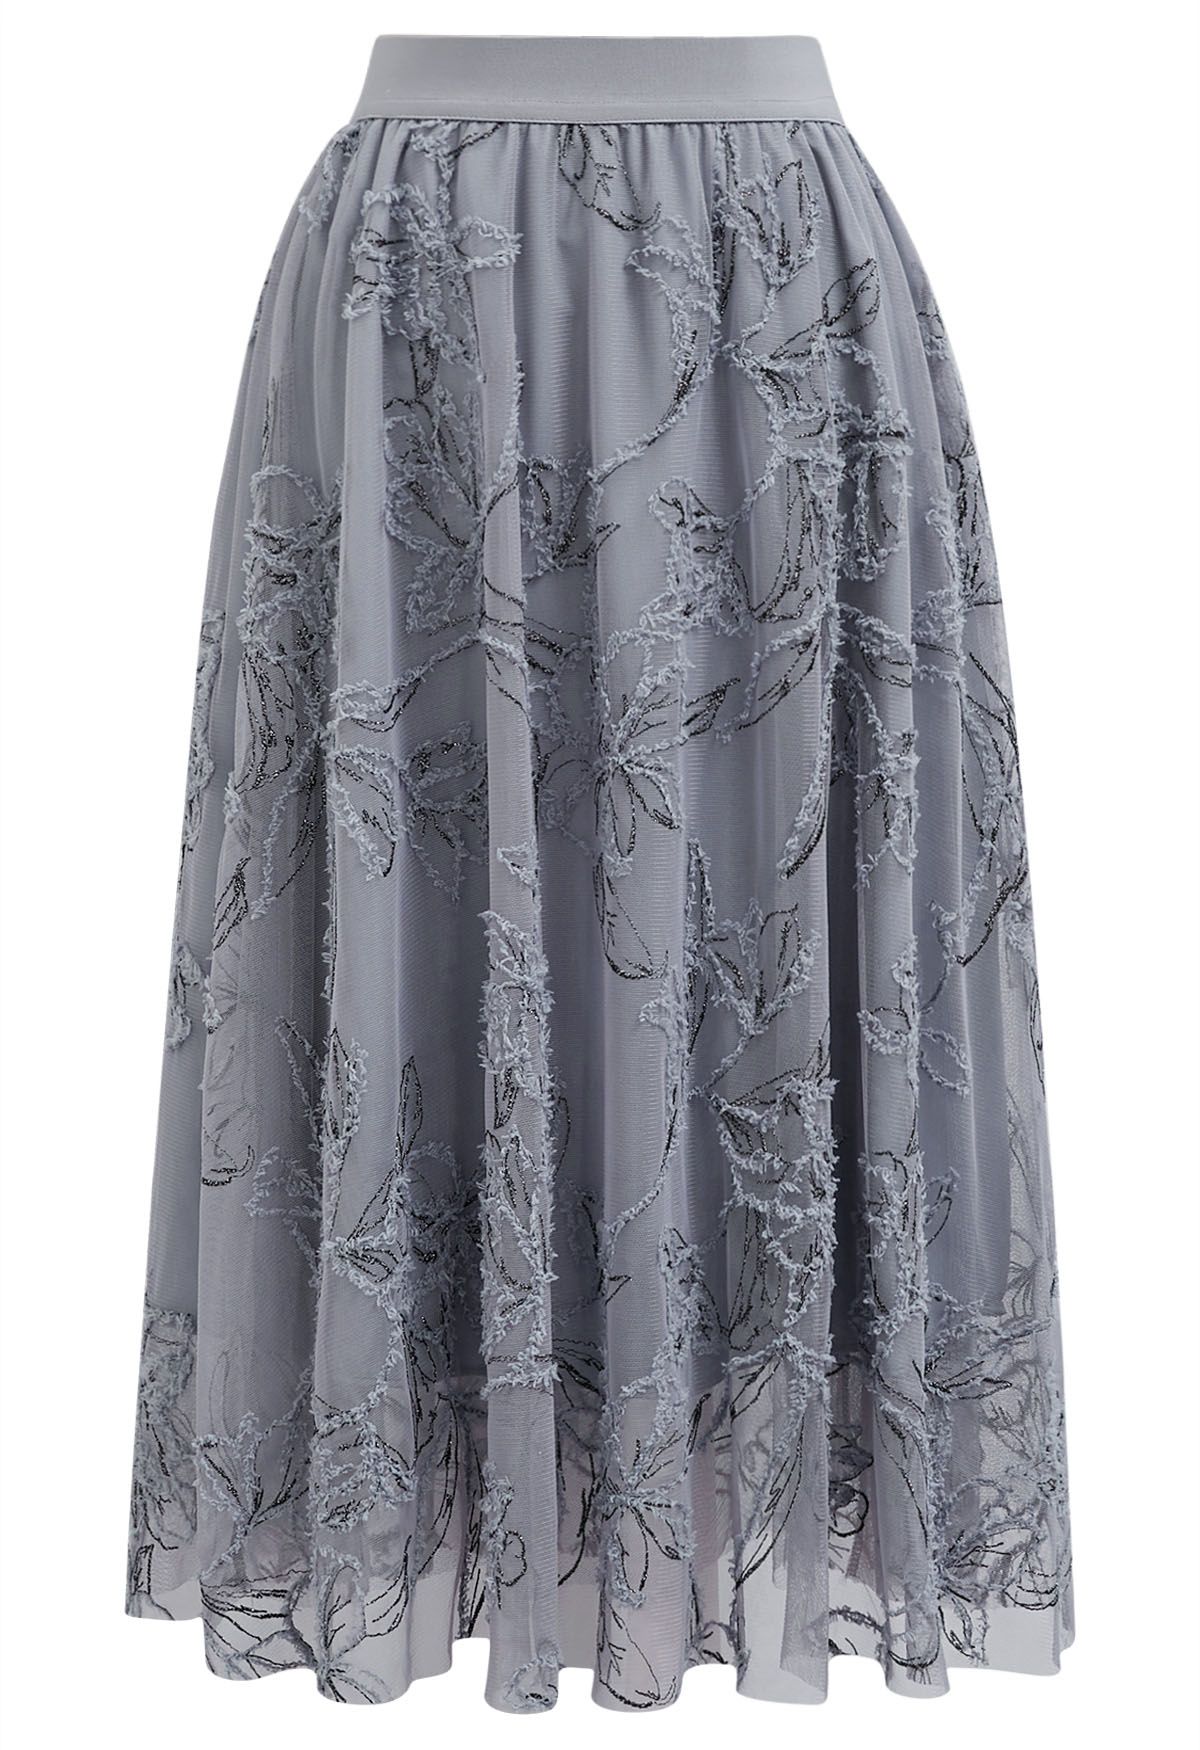 Metallic Thread Fuzzy Floral Mesh Midi Skirt in Grey